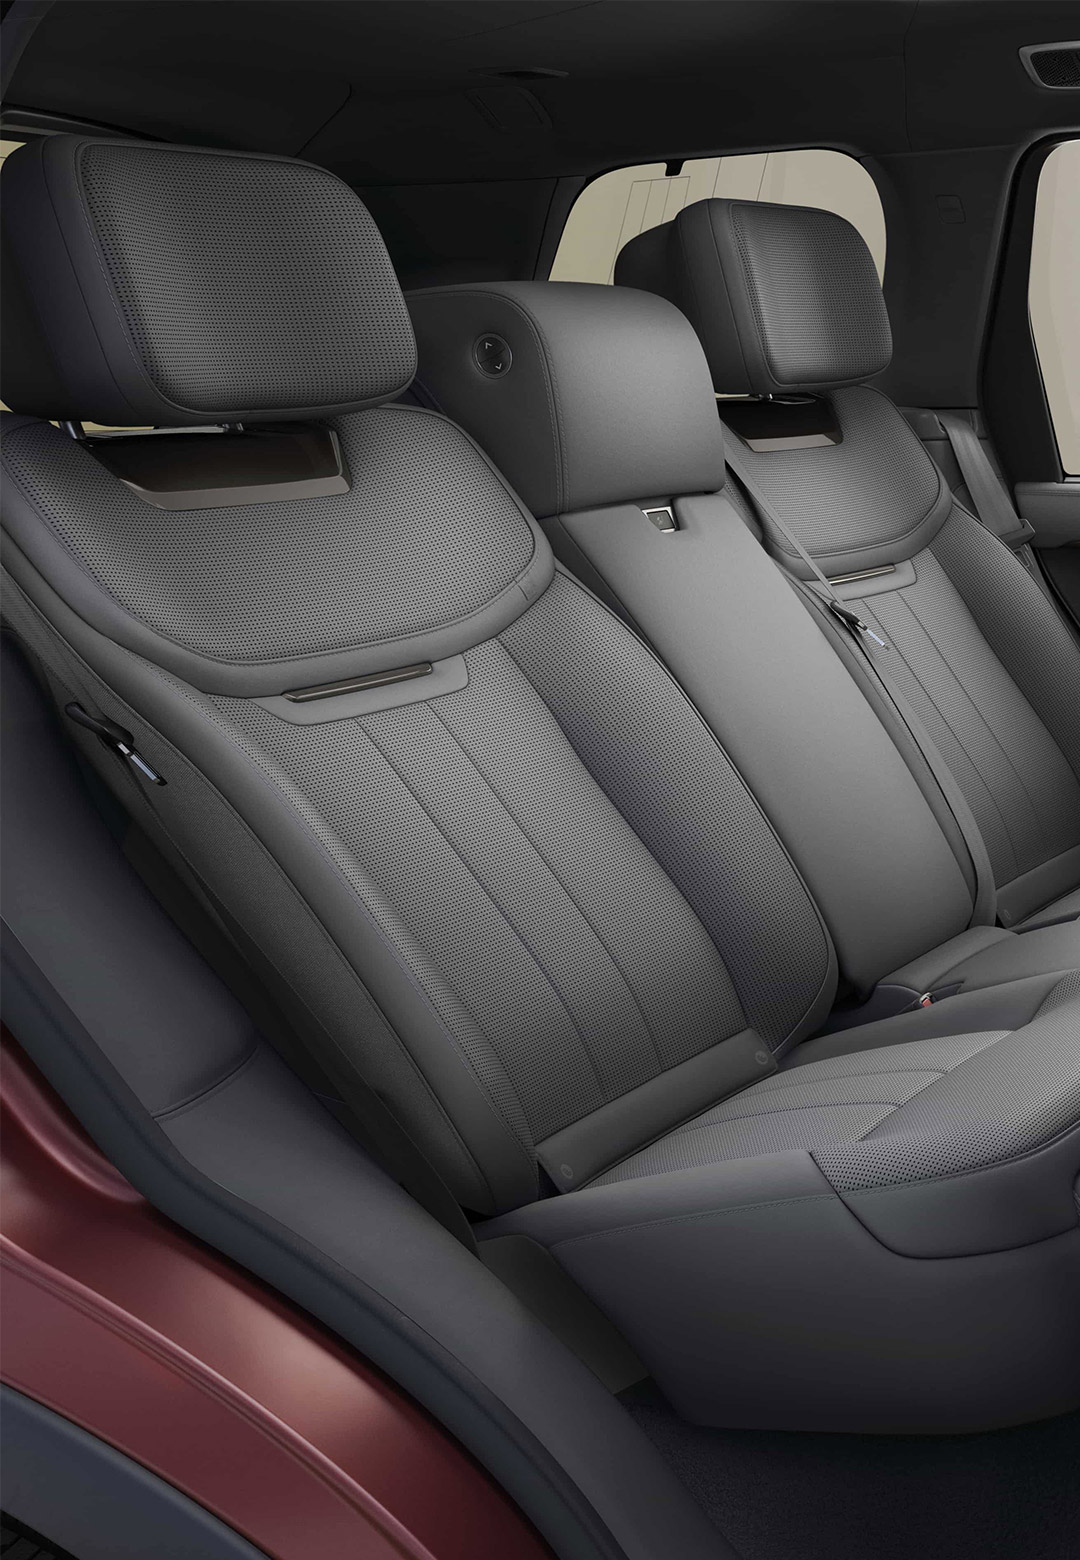 Ultrafabrics × Jaguar Land Rover redefine sustainable luxury